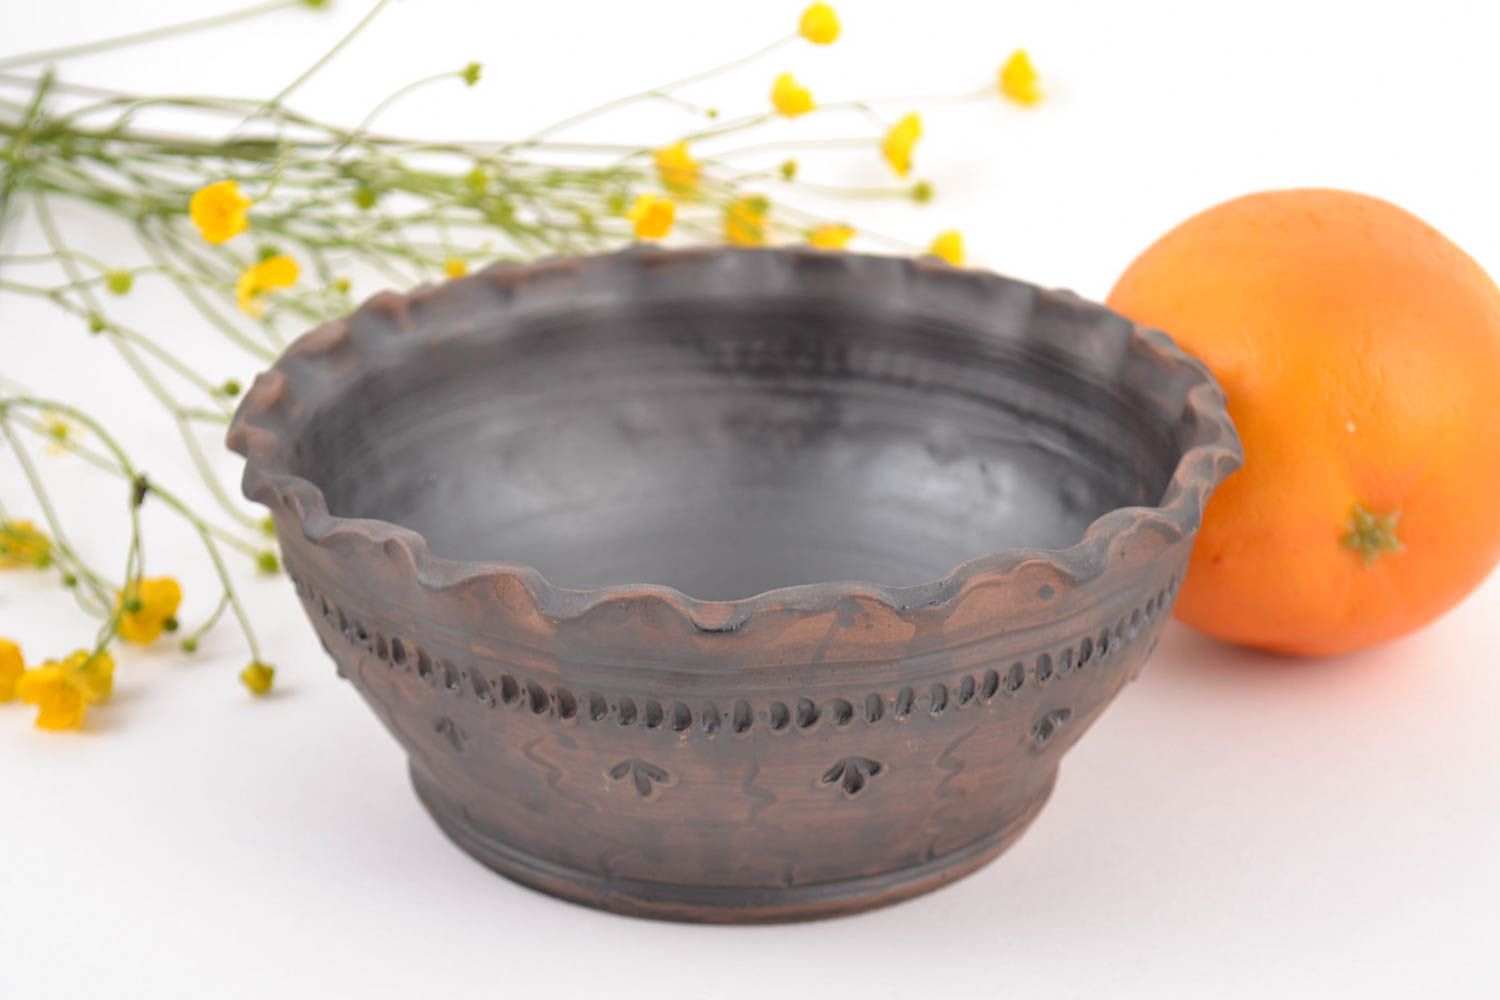 6,3 15 oz ceramic candy bowl with handmade ornament 1 lb photo 1